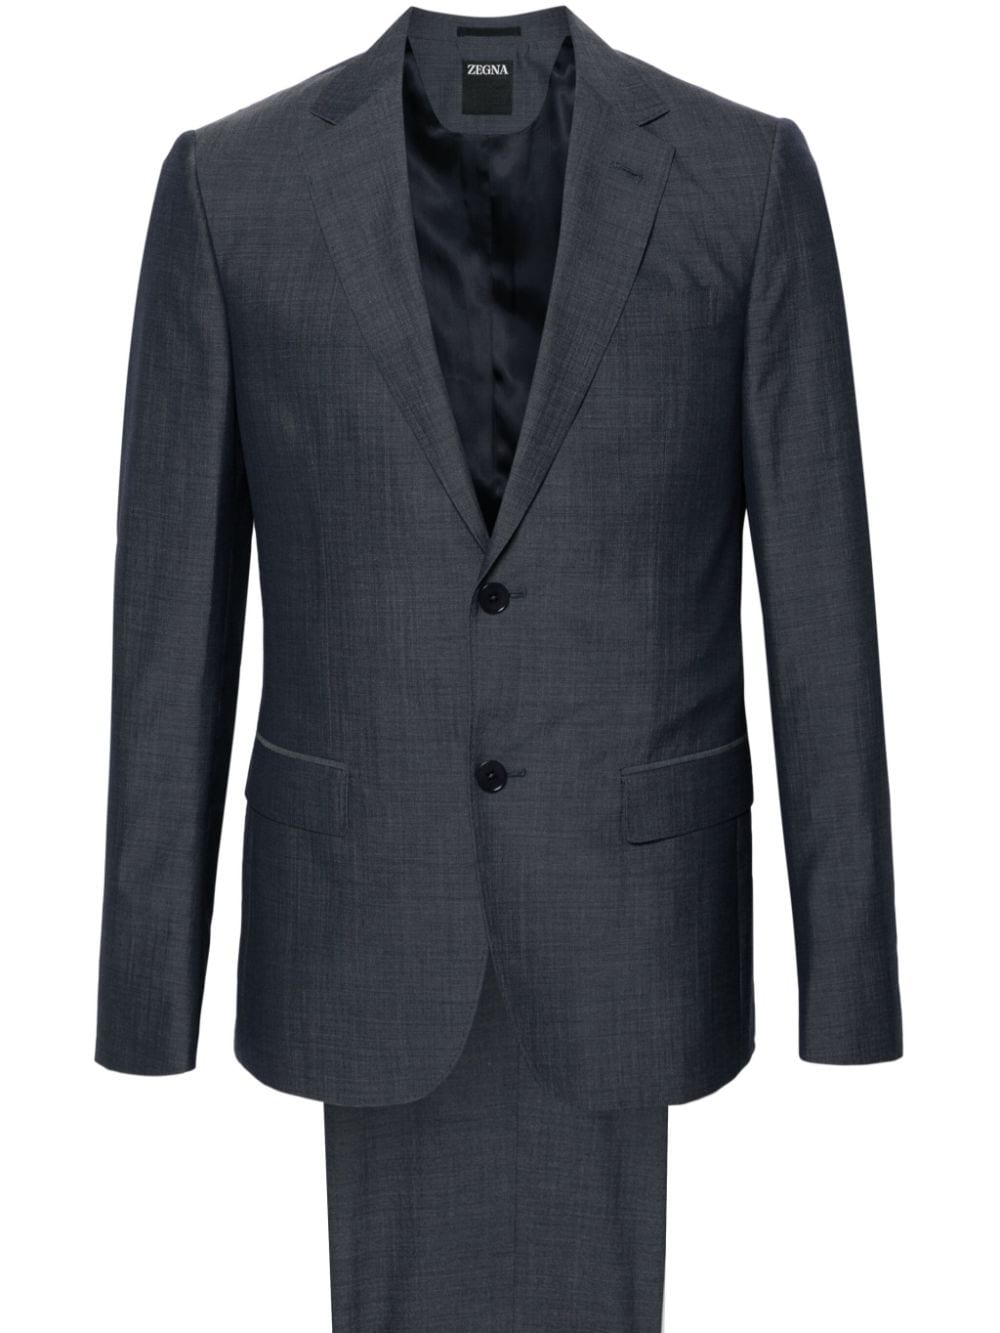 Zegna single-breasted wool suit - Grey von Zegna